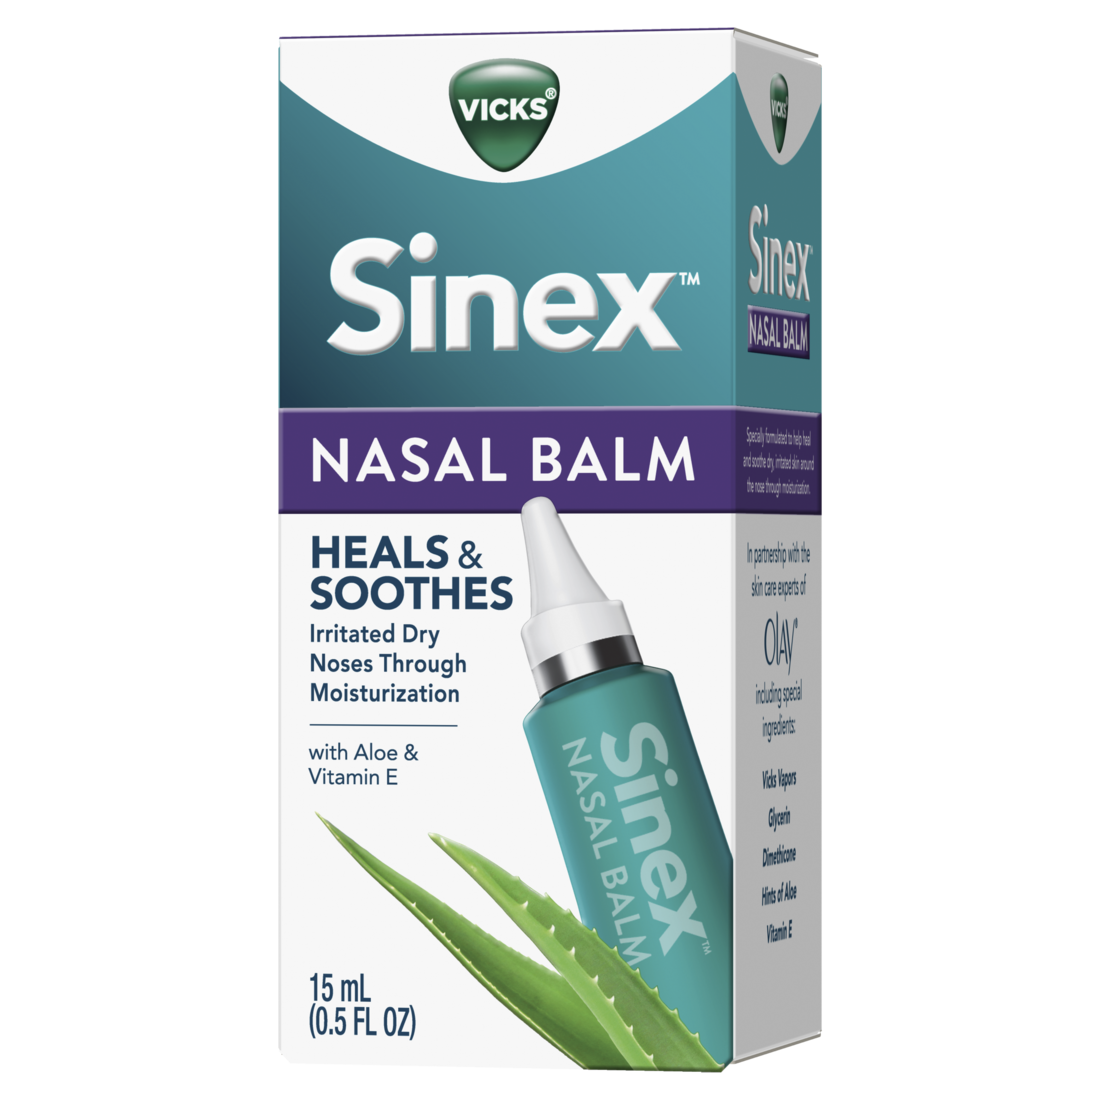 Vicks® Sinex™ Nasal Balm 0.5 FL OZ right